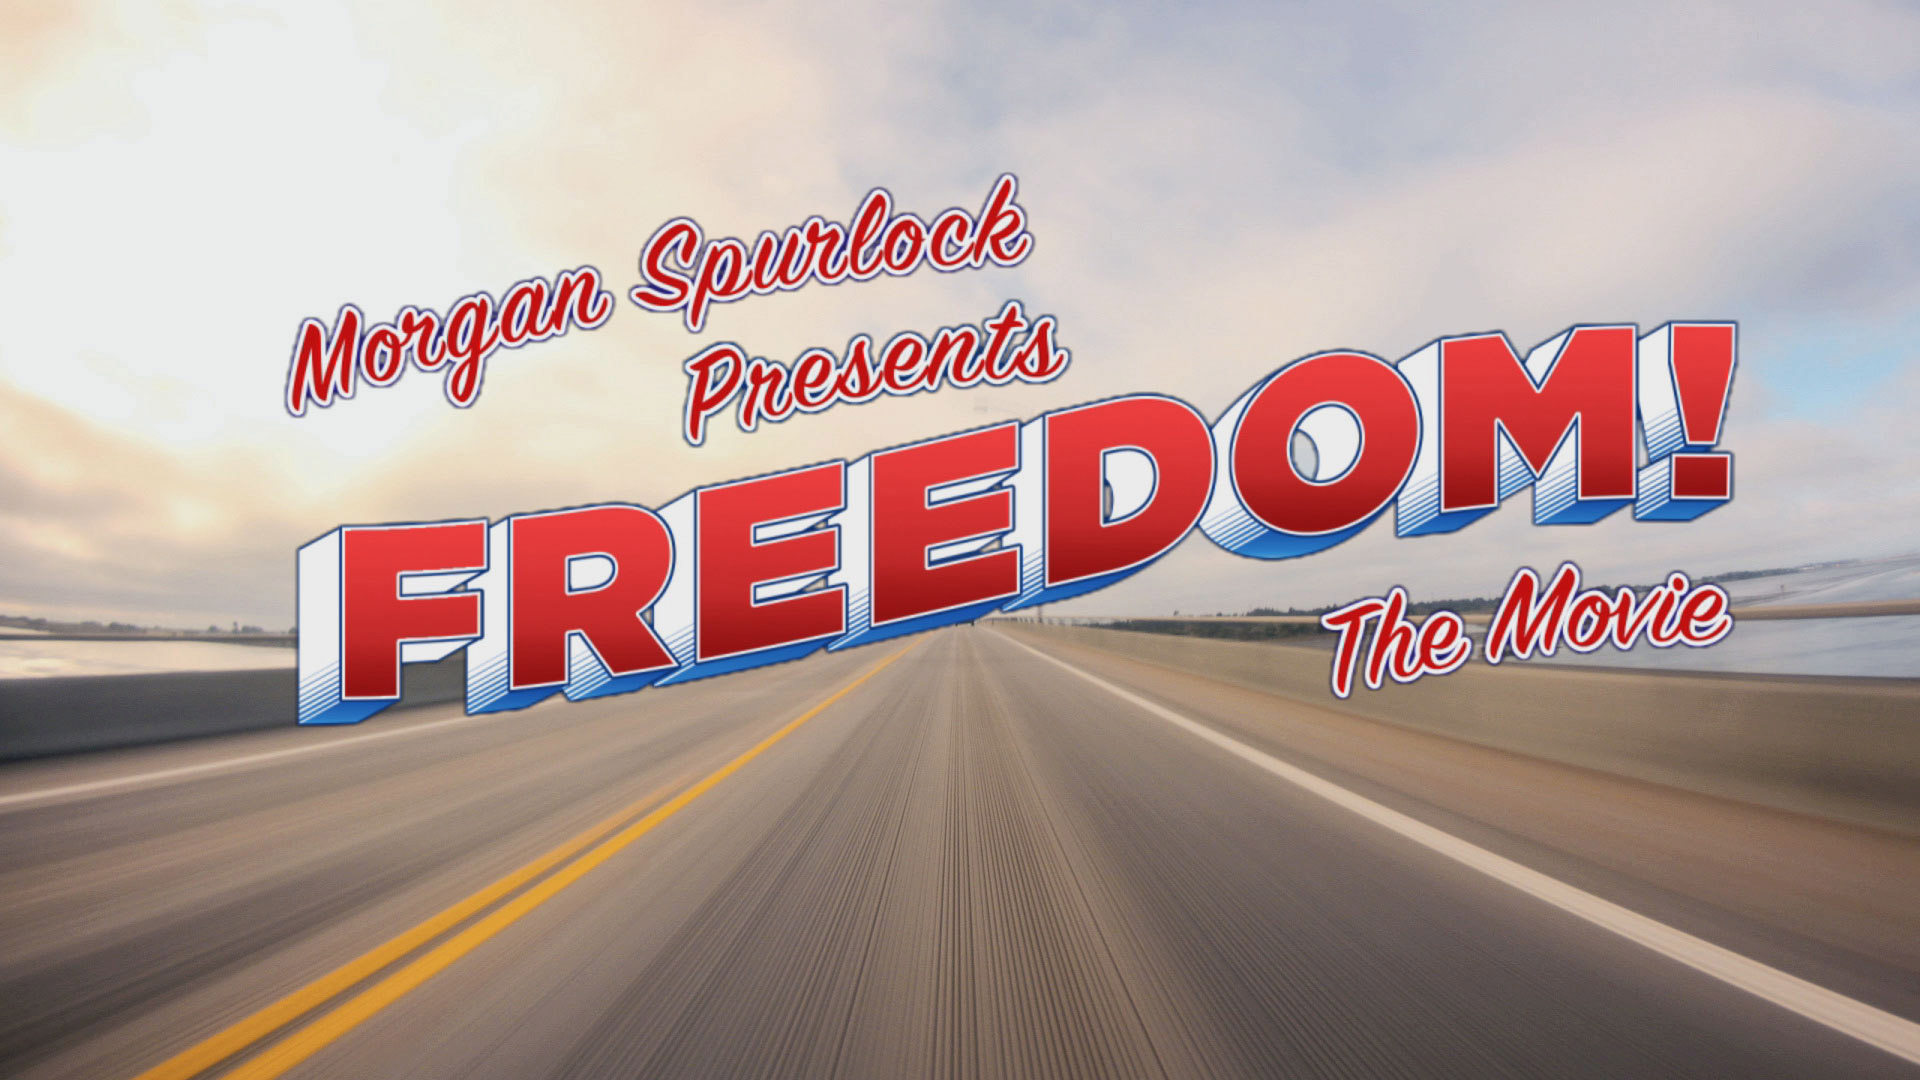 Morgan Spurlock Presents: Freedom! The Movie